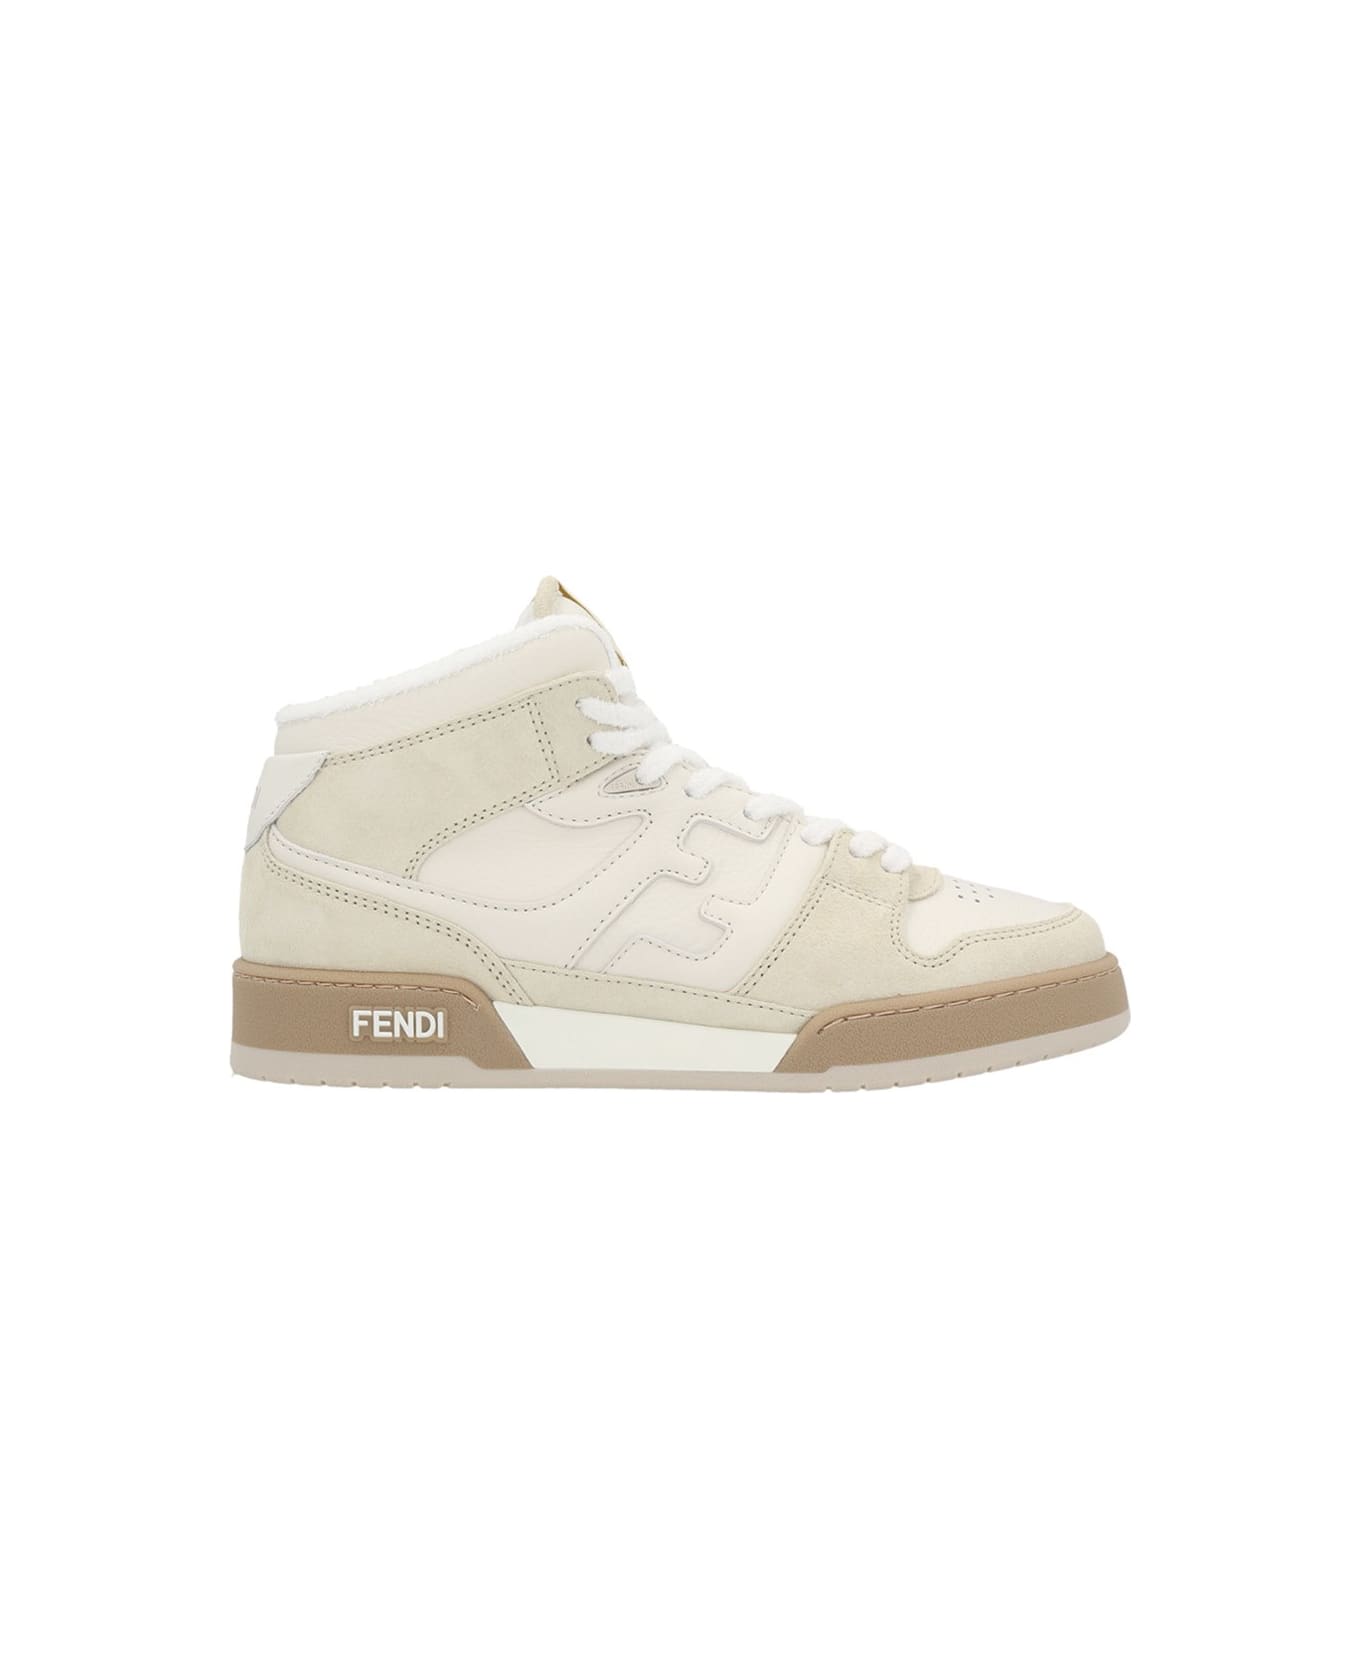 Fendi Match Sneakers - Ice+bianco fendi+ice スニーカー